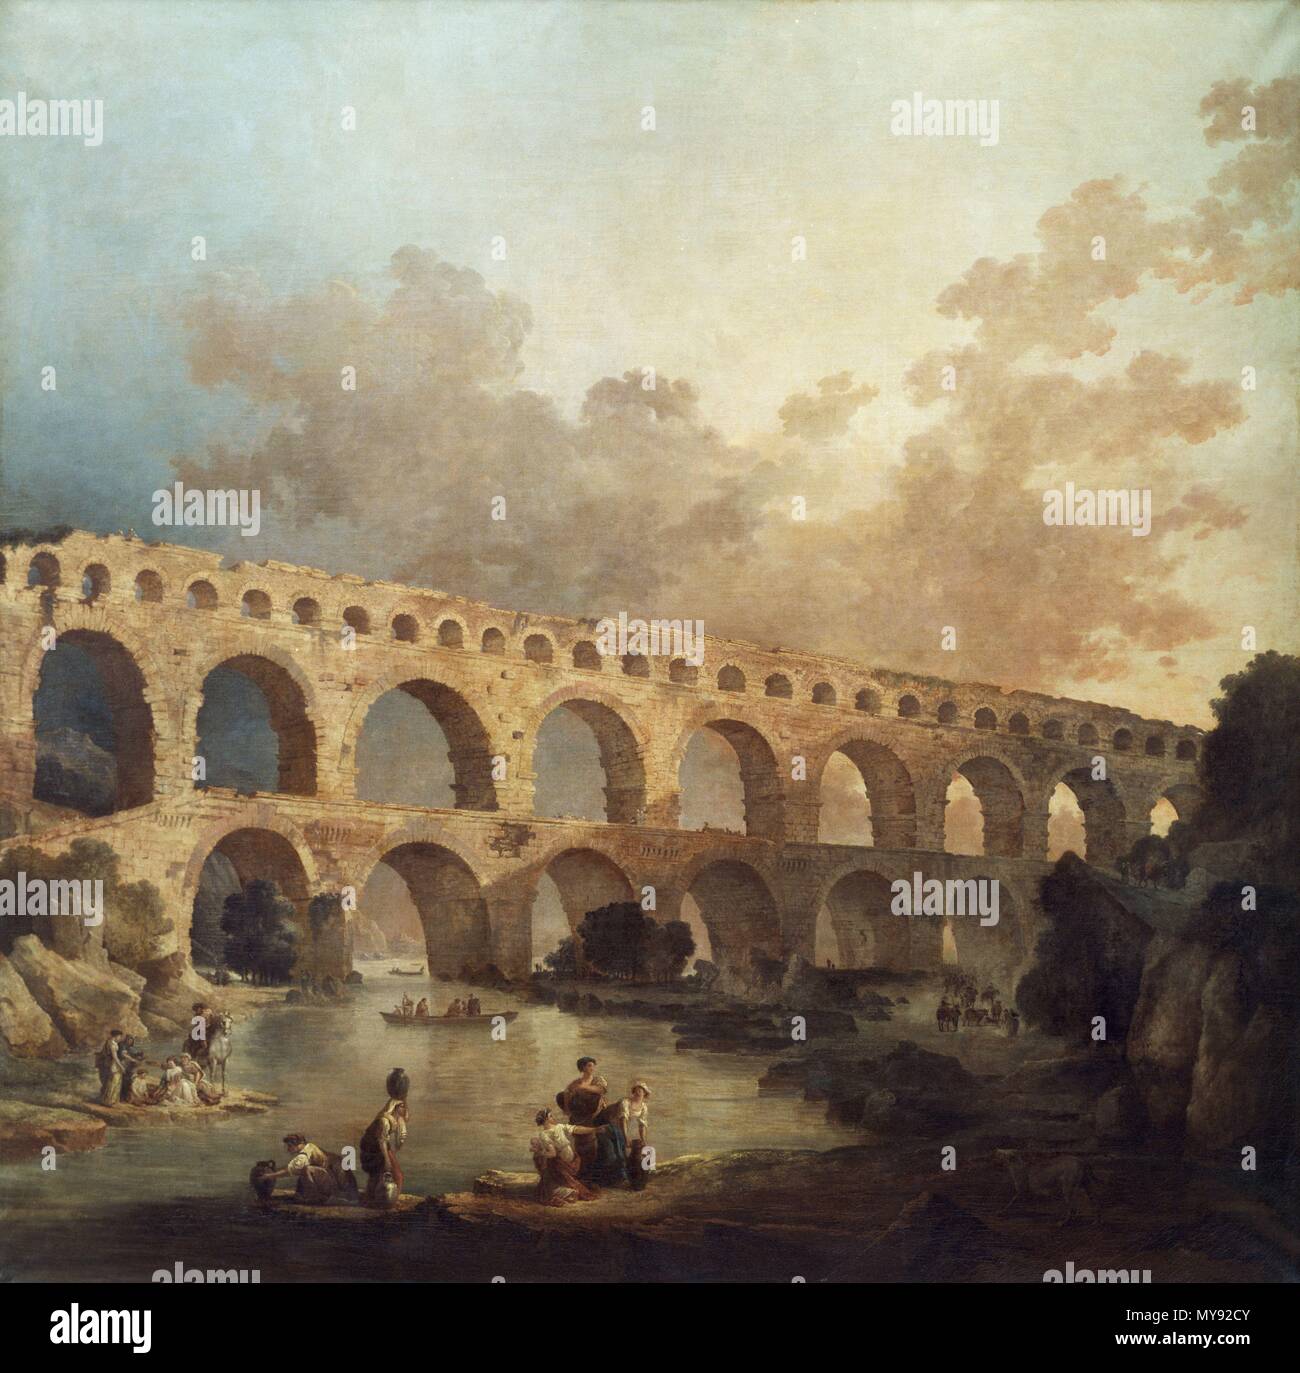 Der Pont du Gard, Nimes - 1786 - 242 x 242 cm, Öl auf Leinwand. Autor: Hubert Robert (1733-1808). Lage: Louvre Museum - Gemälde. Auch als: El Puente de GARD; Le Pont du Gard bekannt. Stockfoto